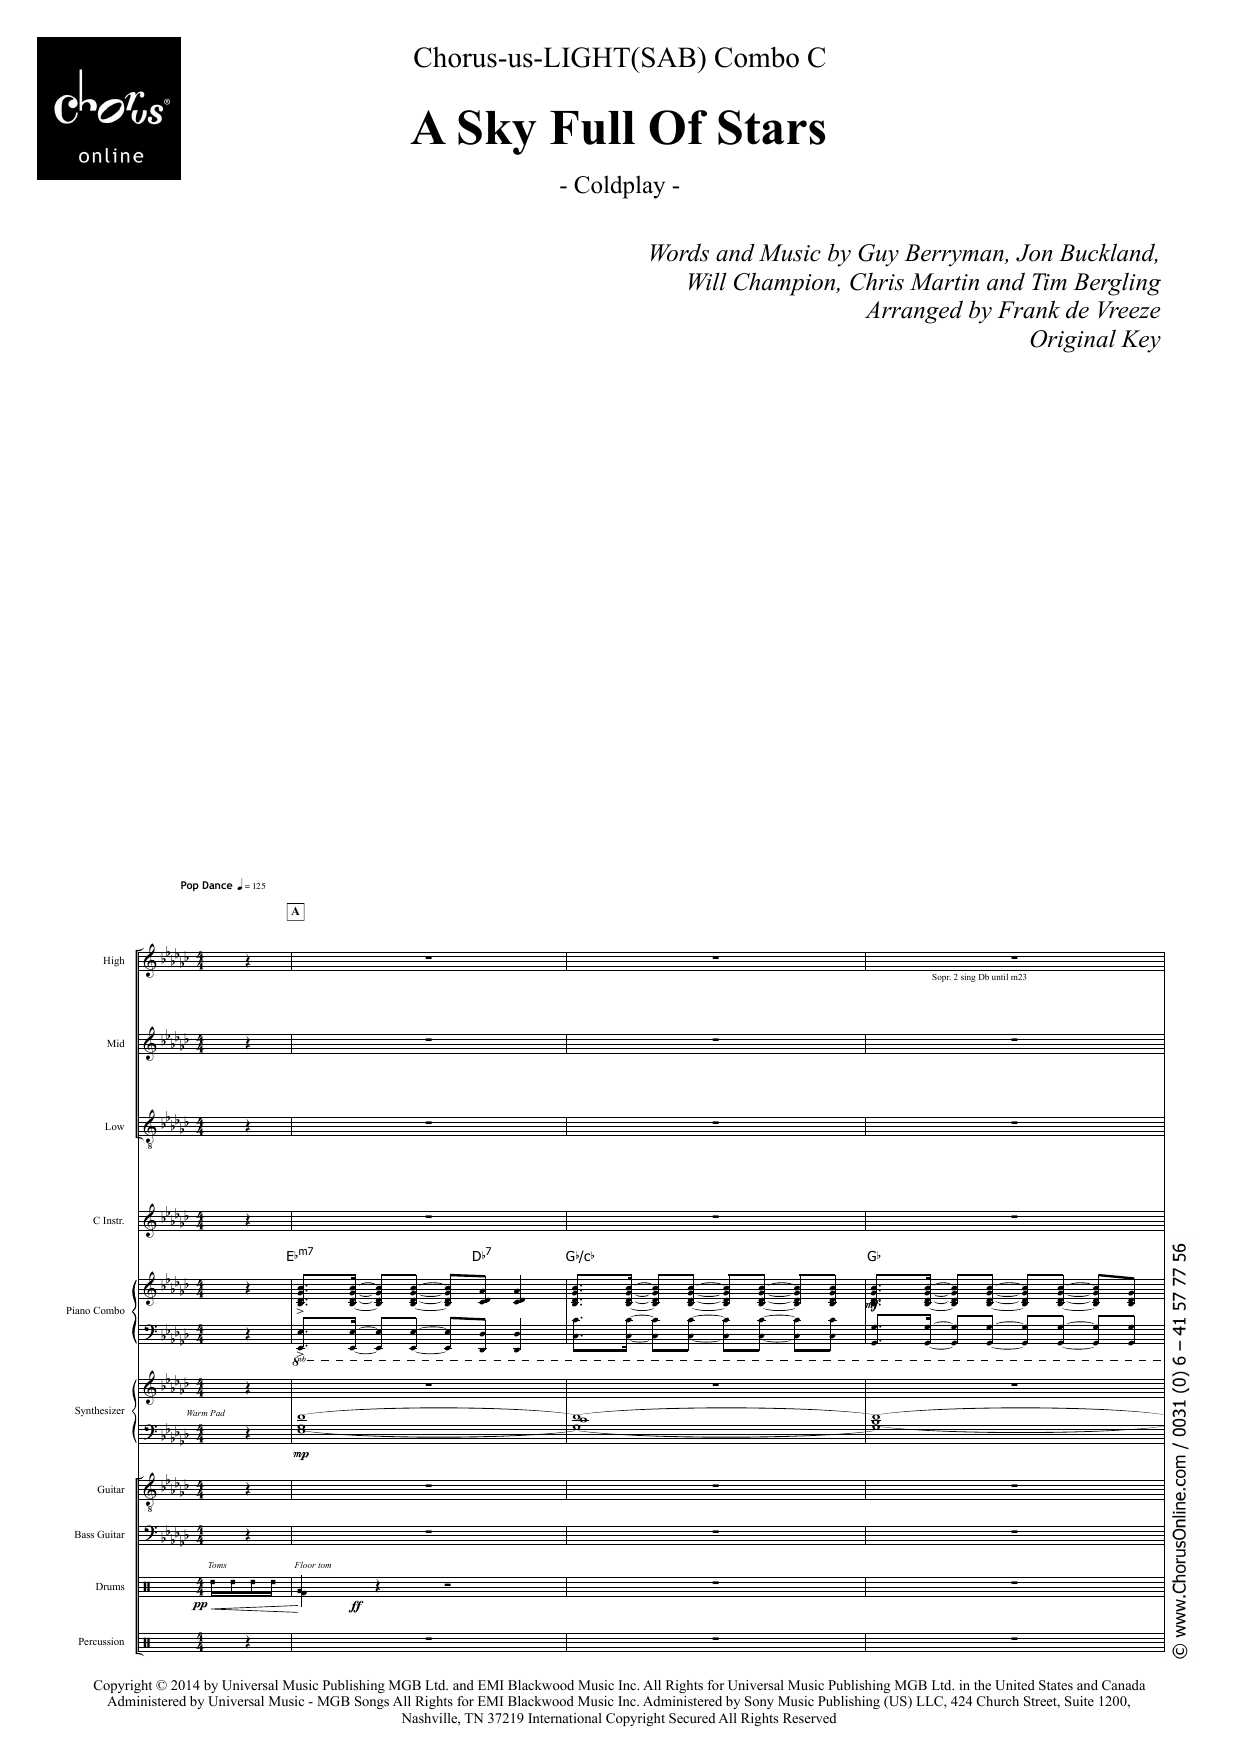 Coldplay A Sky Full Of Stars (arr. Frank de Vreeze) sheet music notes printable PDF score